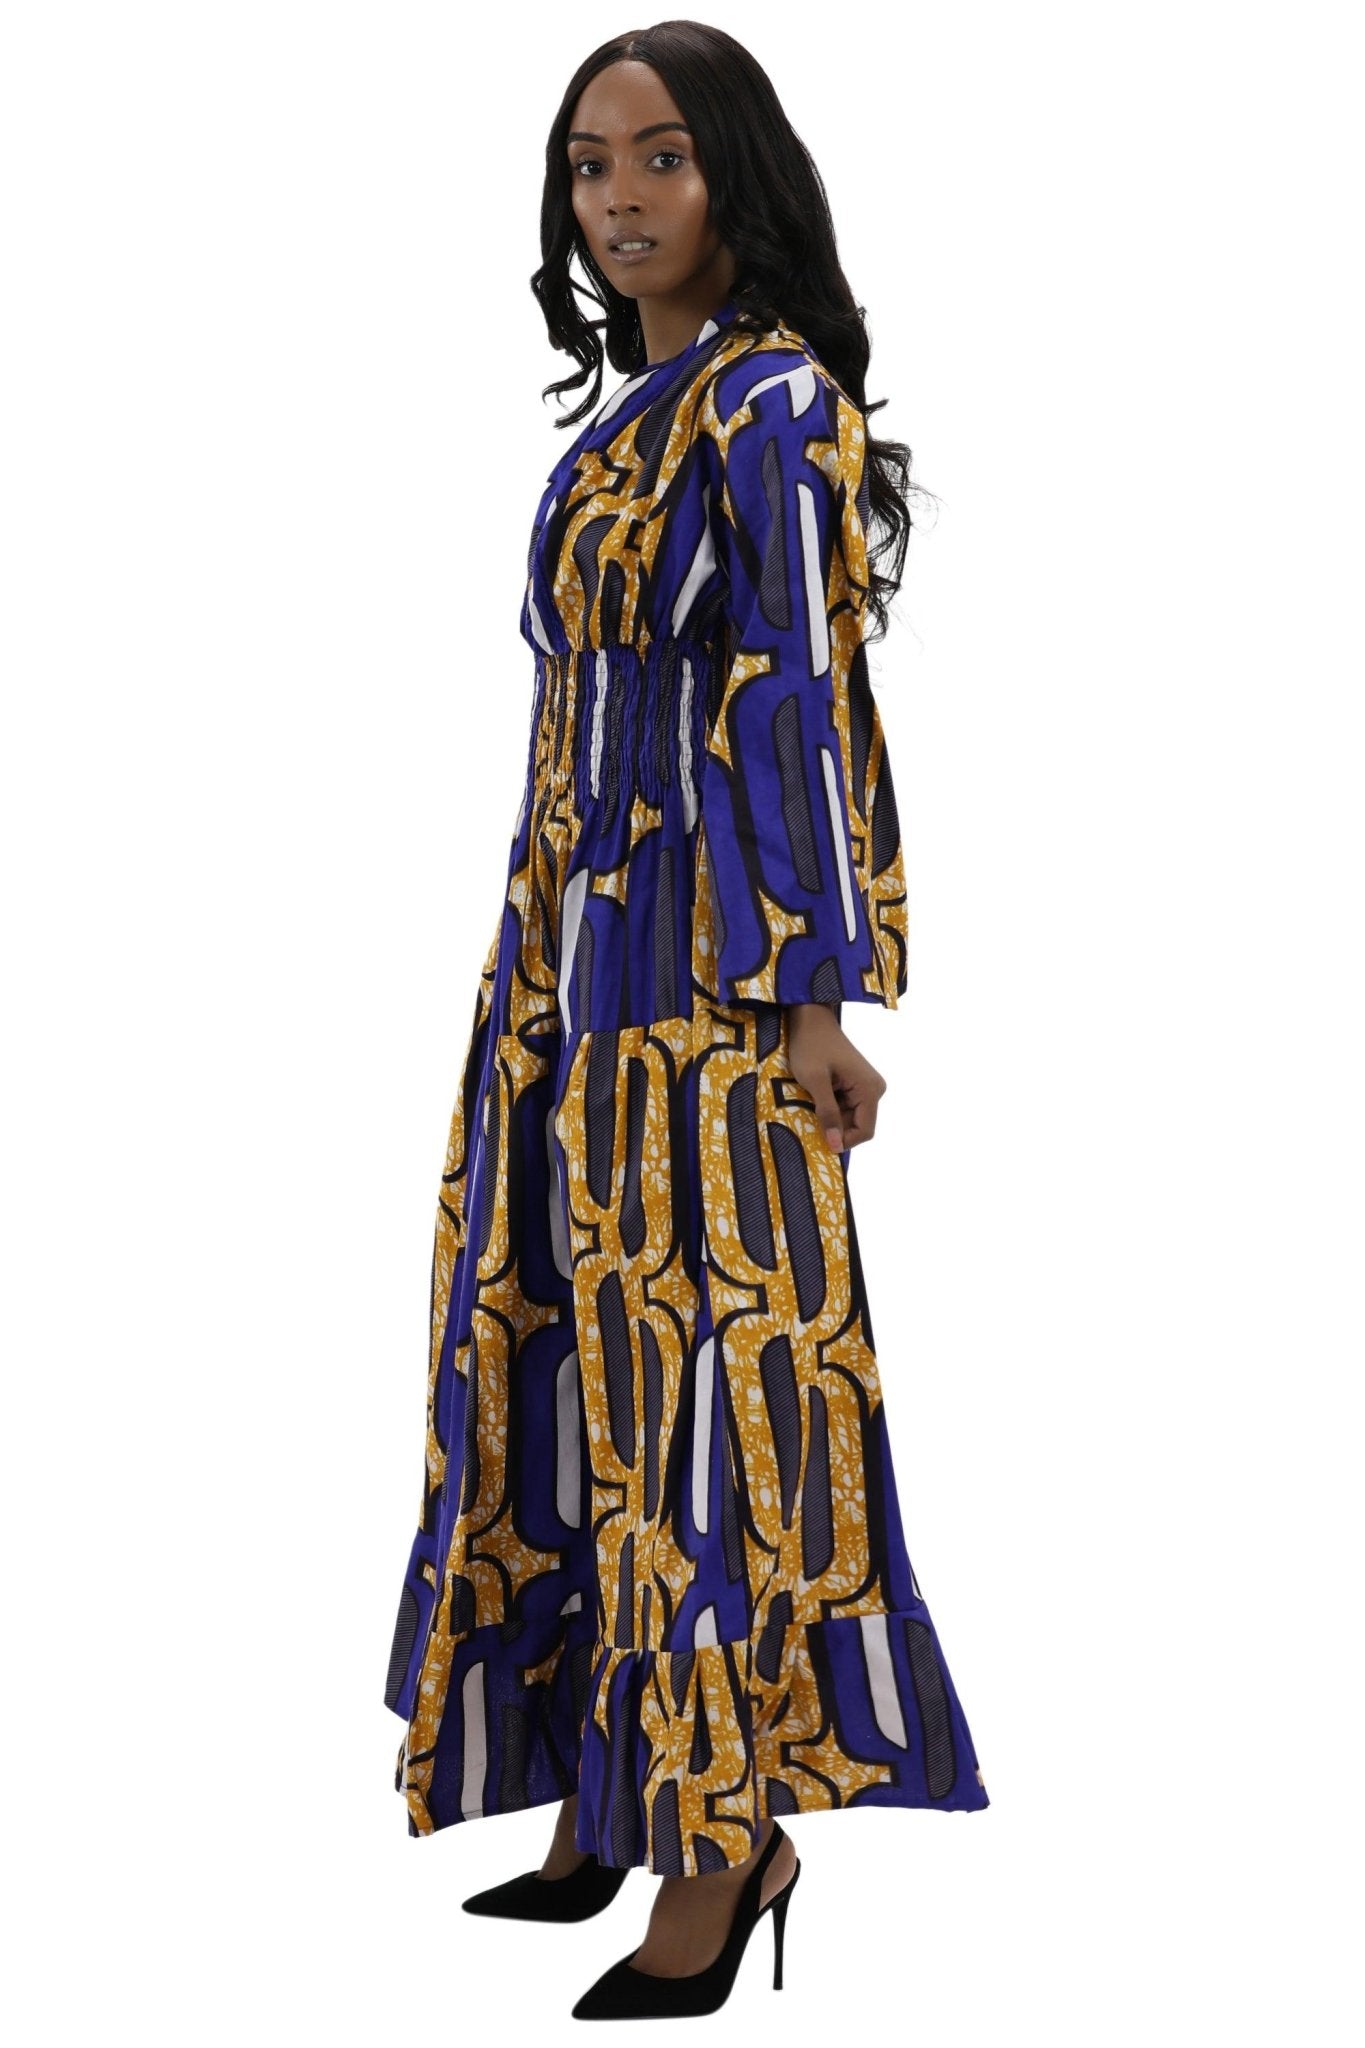 Bell Sleeves Long African Print Maxi Dress 2183 - Advance Apparels Inc